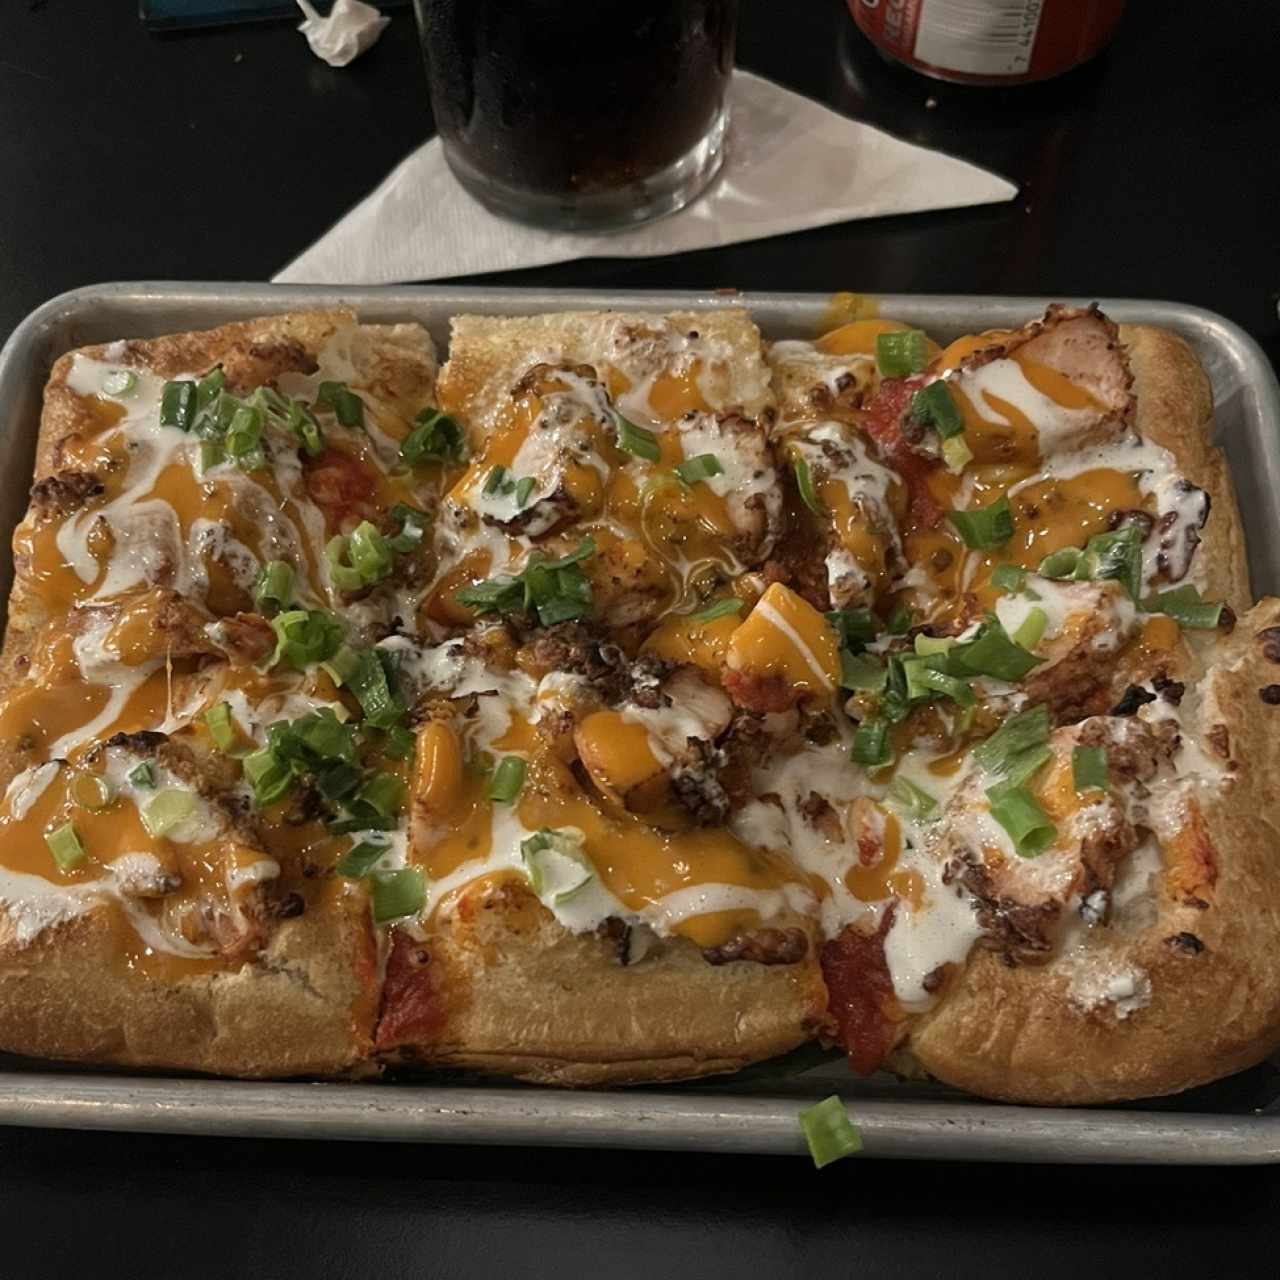 Pizzas - Buffalo Detroit style